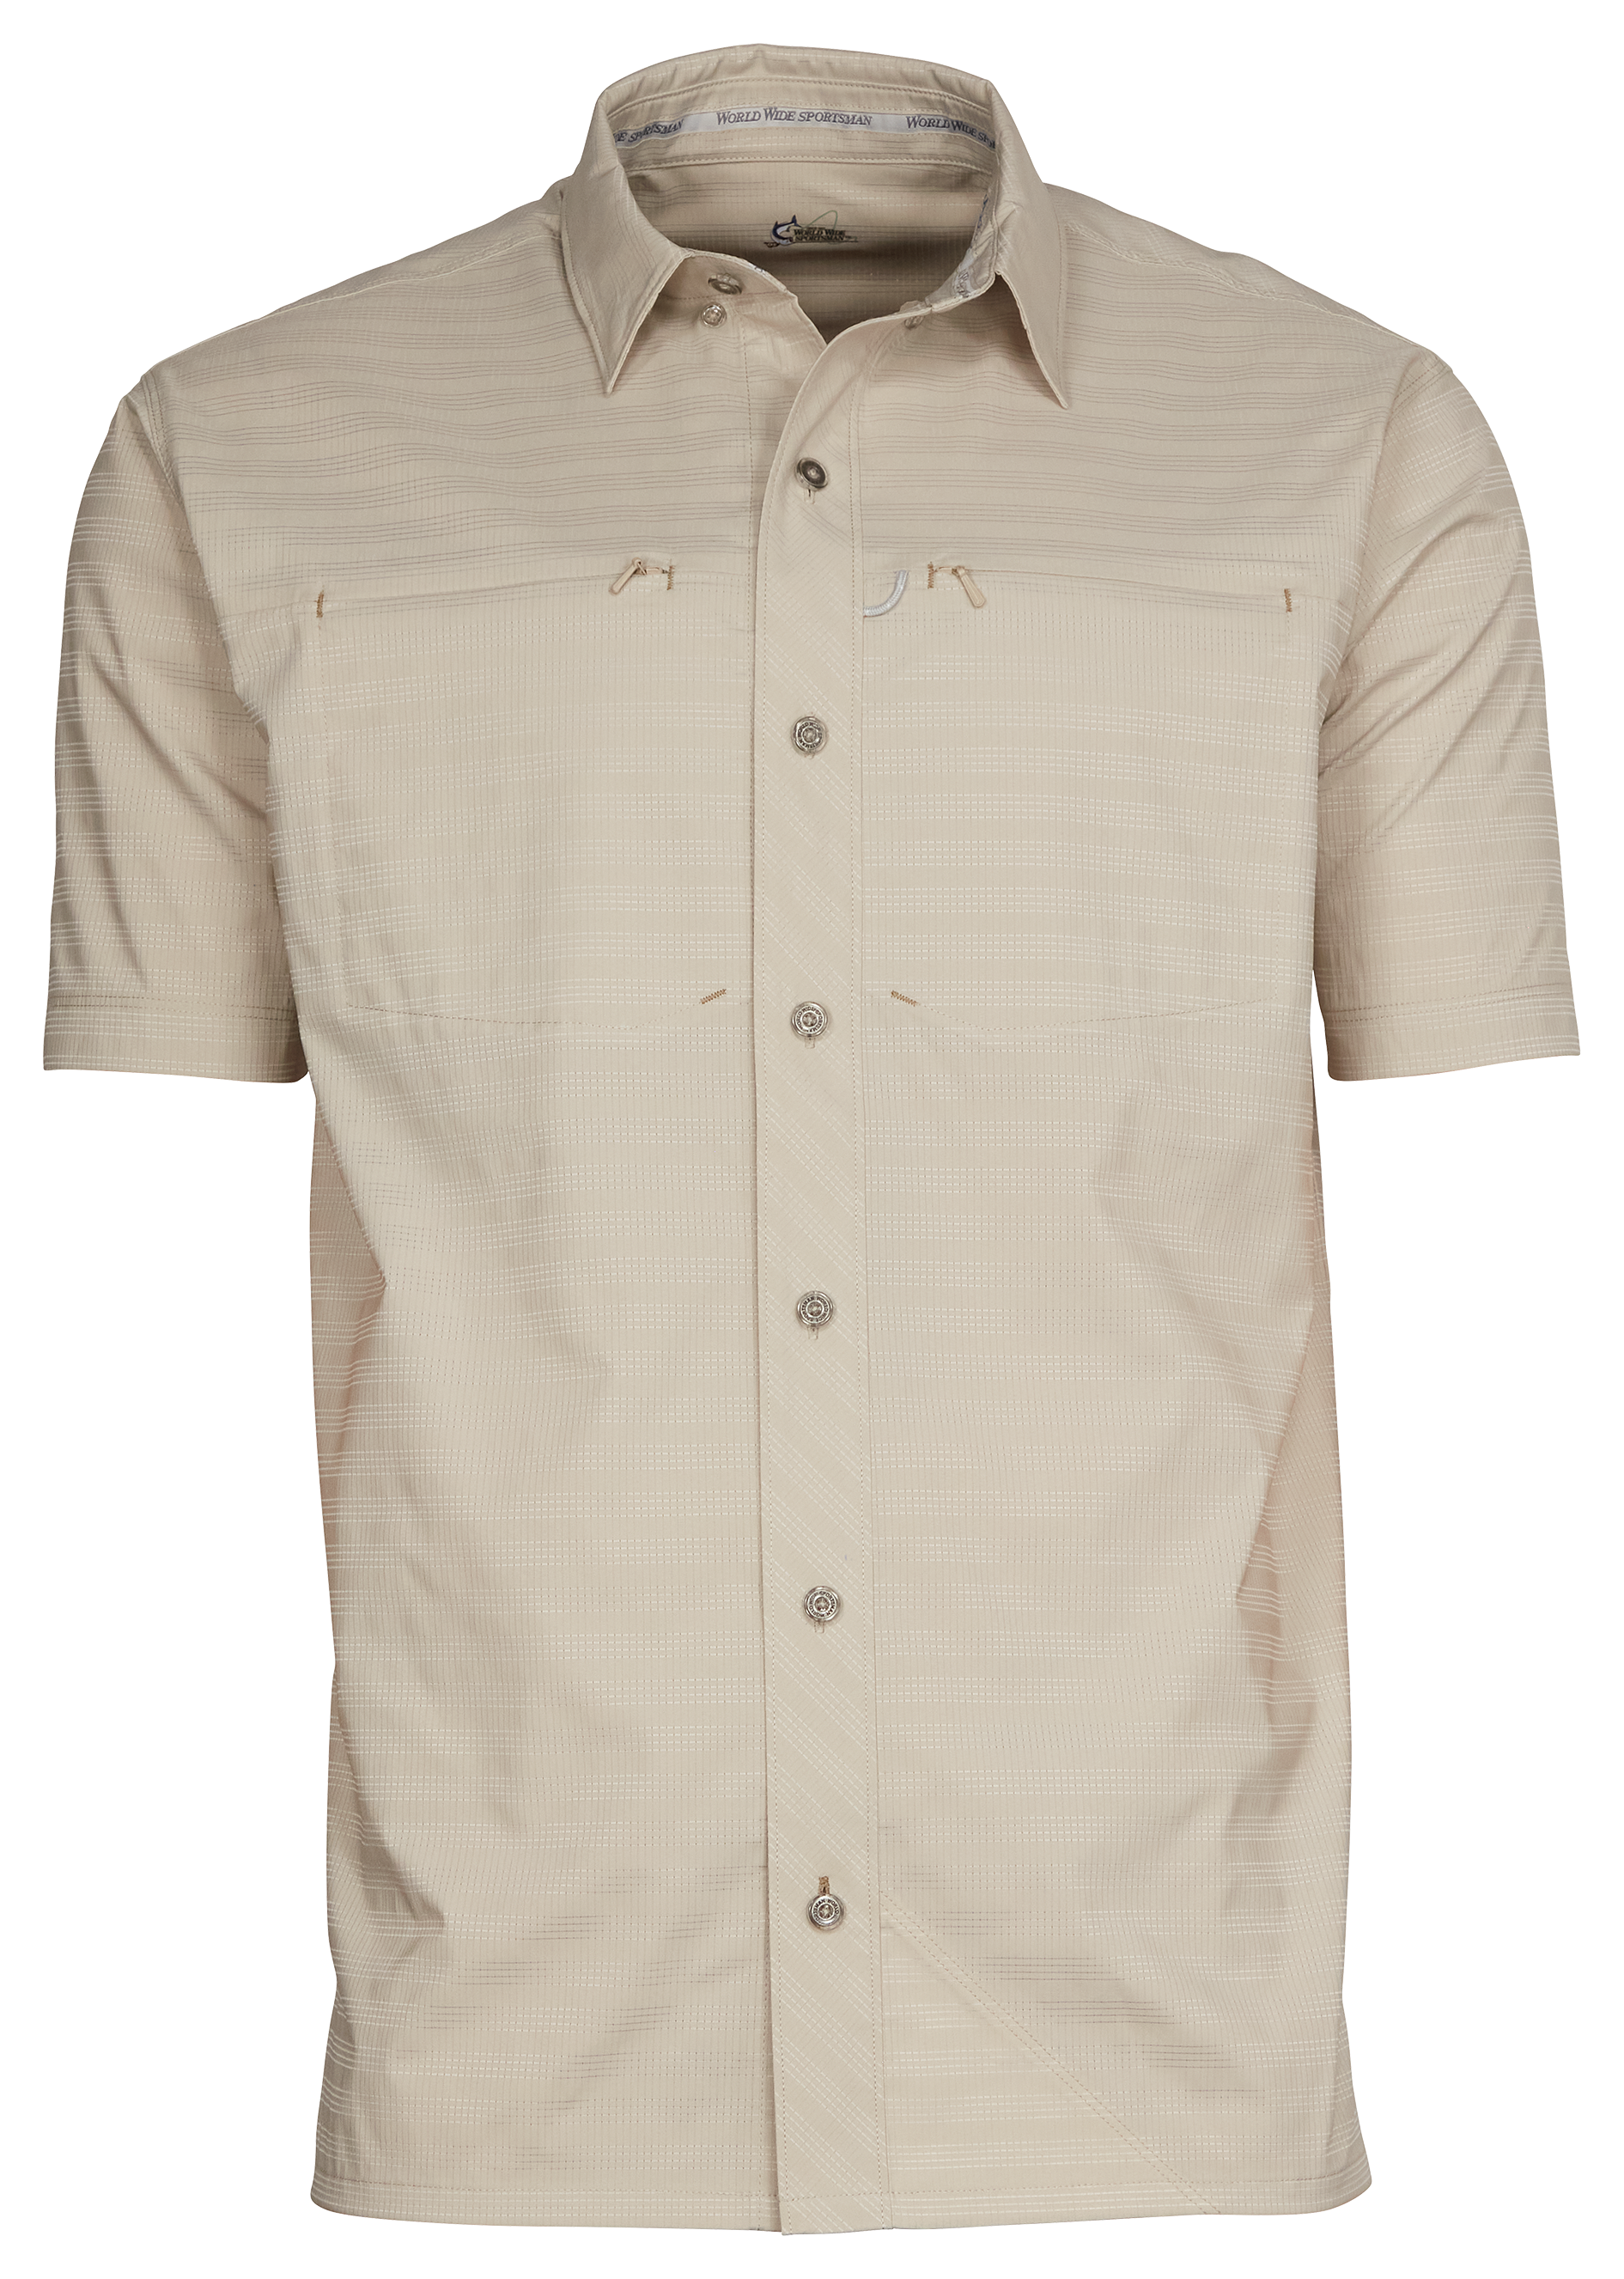 World Wide Sportsman Seacrest 2-Pocket Short-Sleeve Button-Down Shirt for Men - Peyote - 3XL